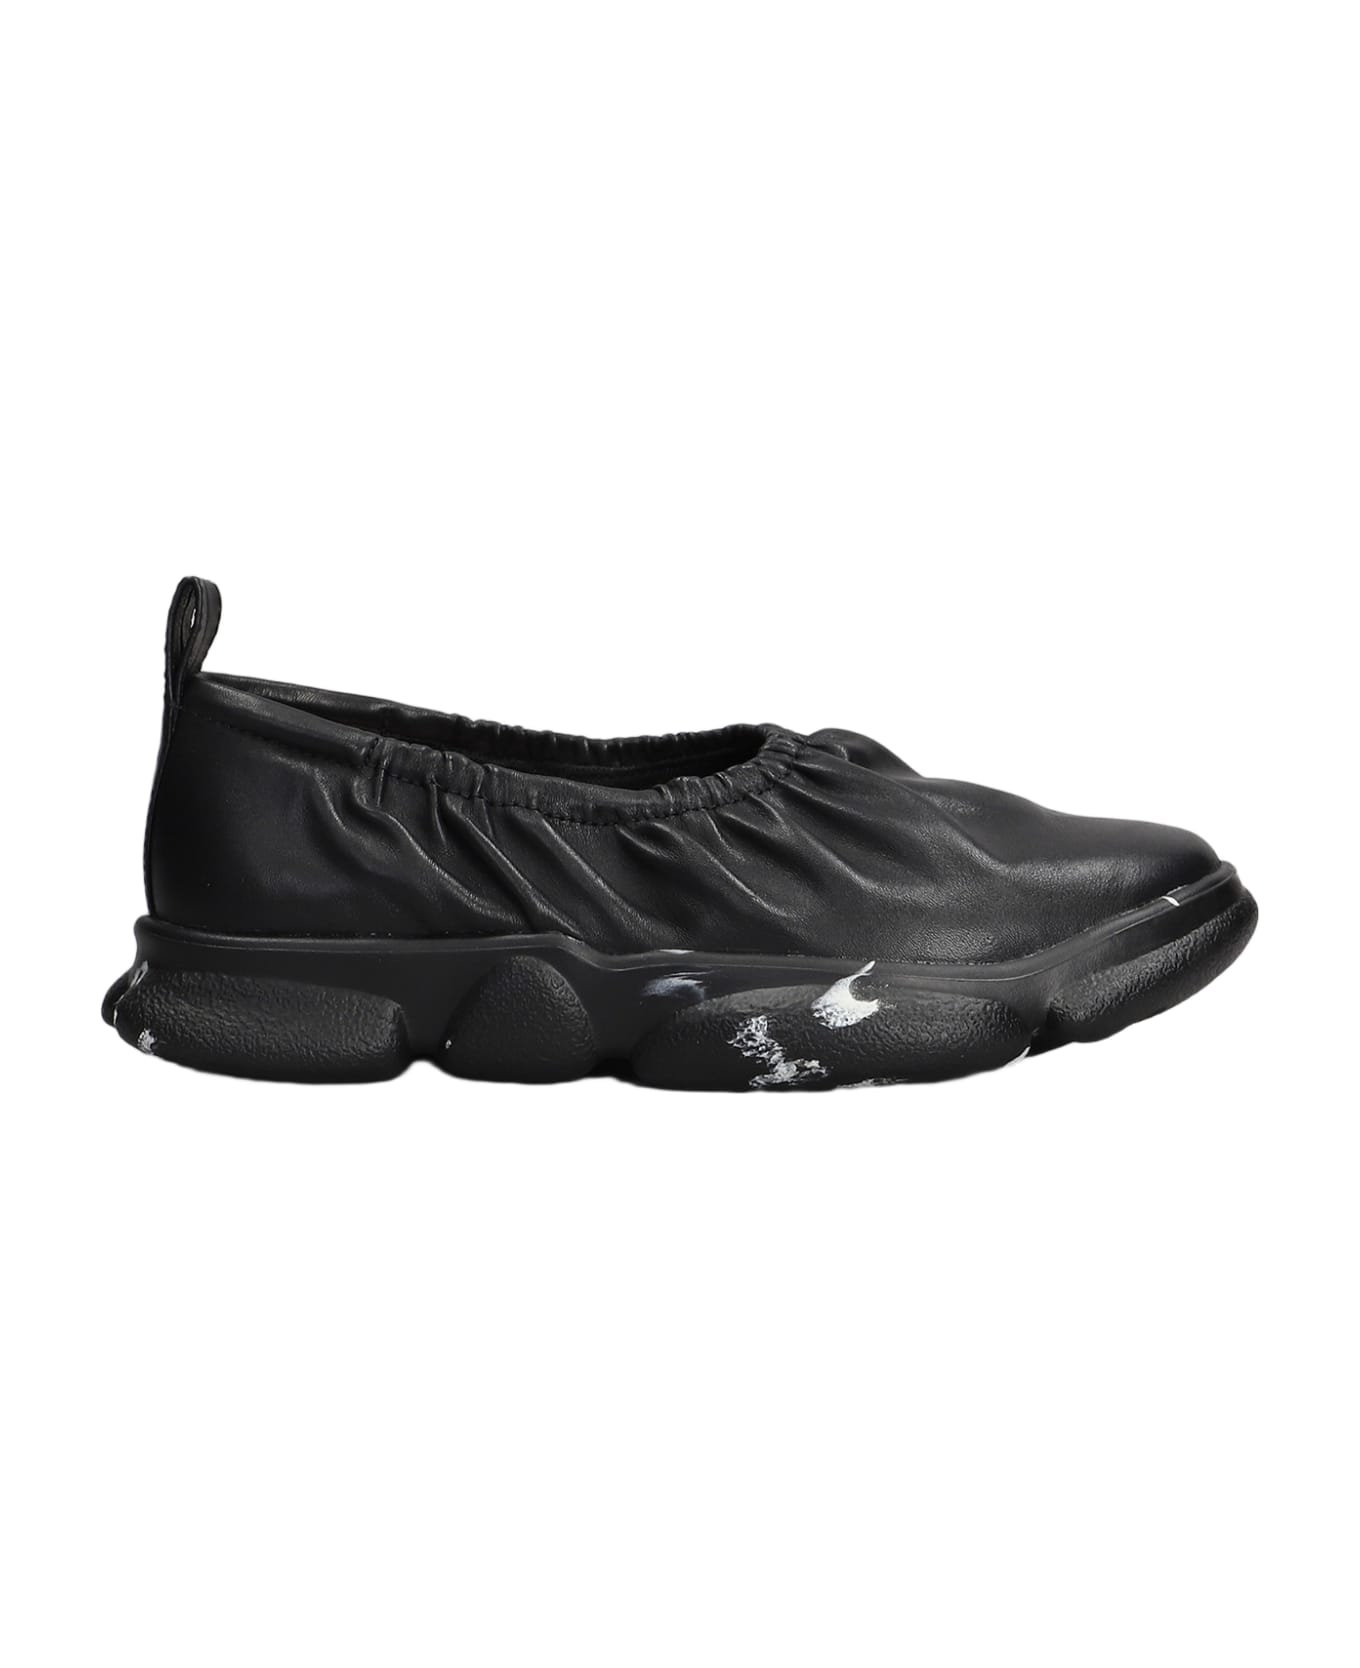 Camper Karst Sneakers In Black Leather - black スニーカー